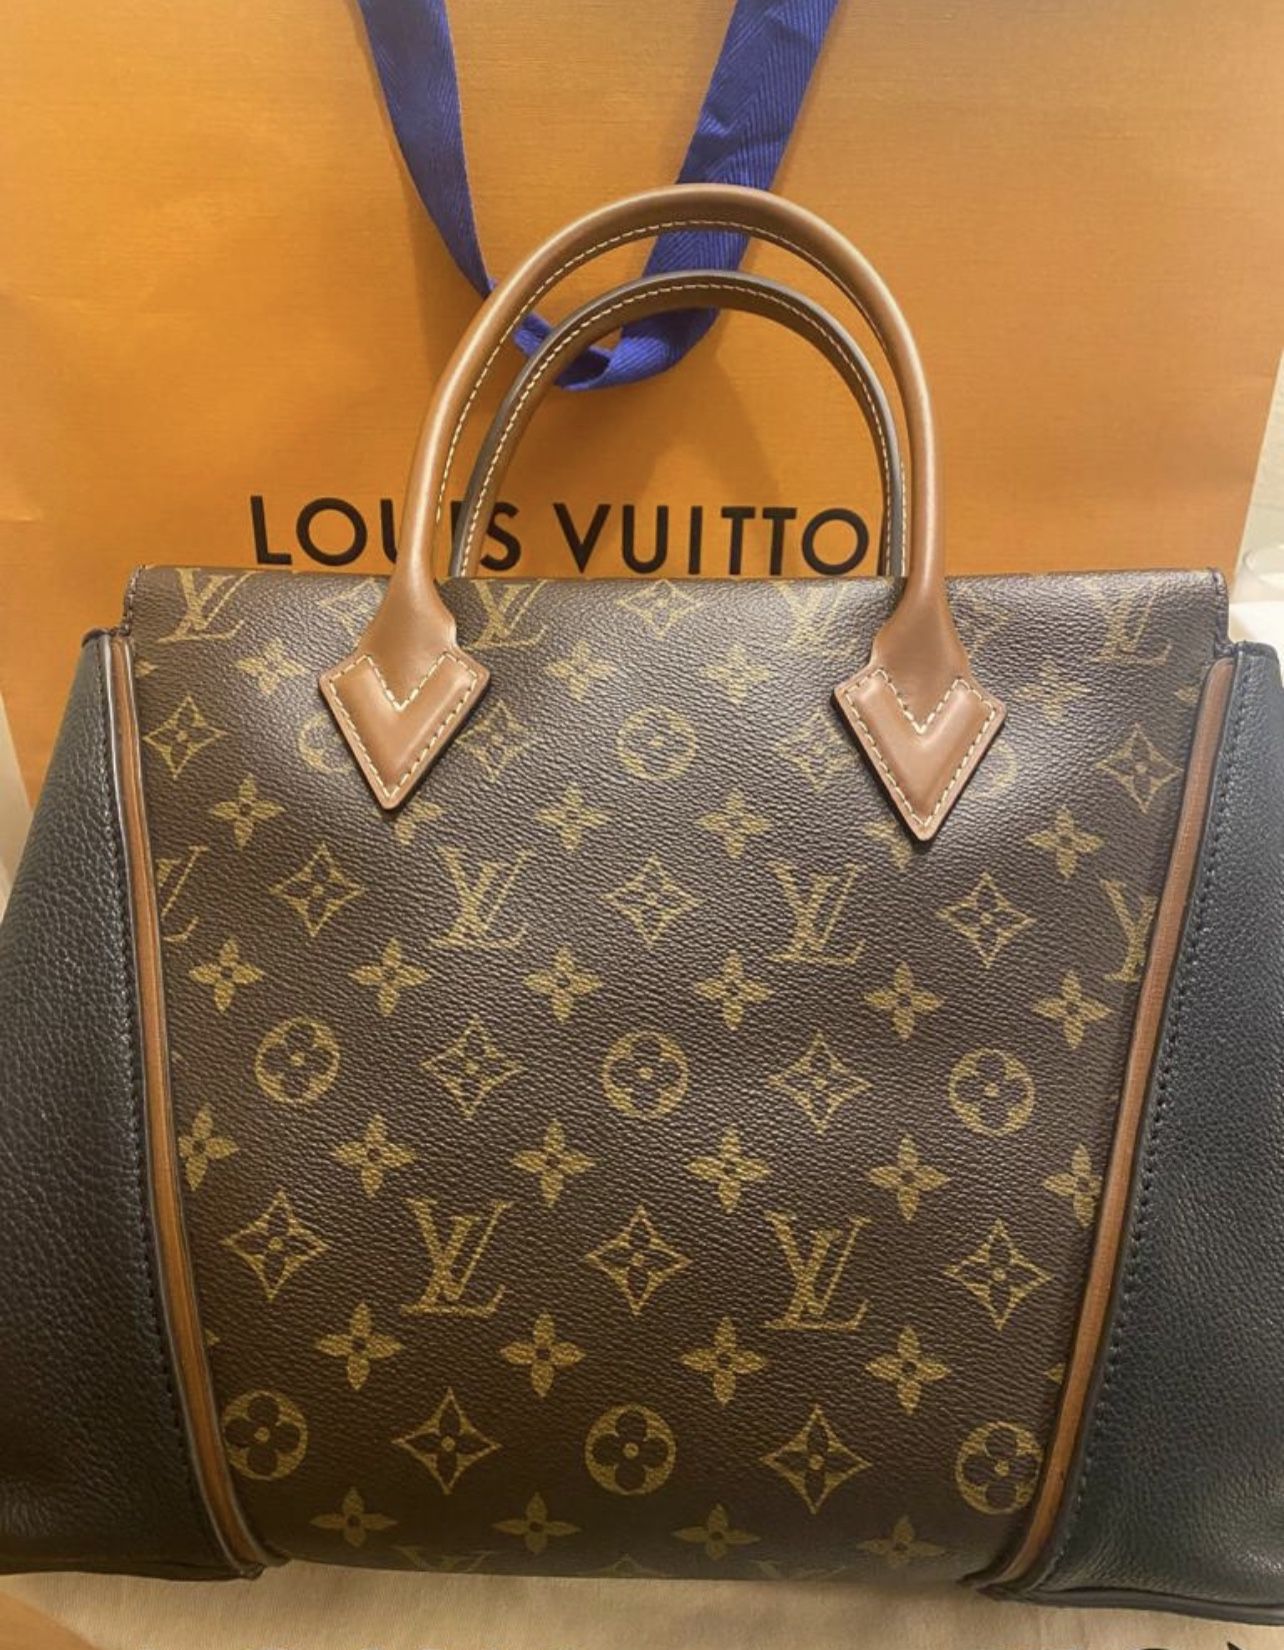 Louis Vuitton Used for Sale in Miramar, FL - OfferUp